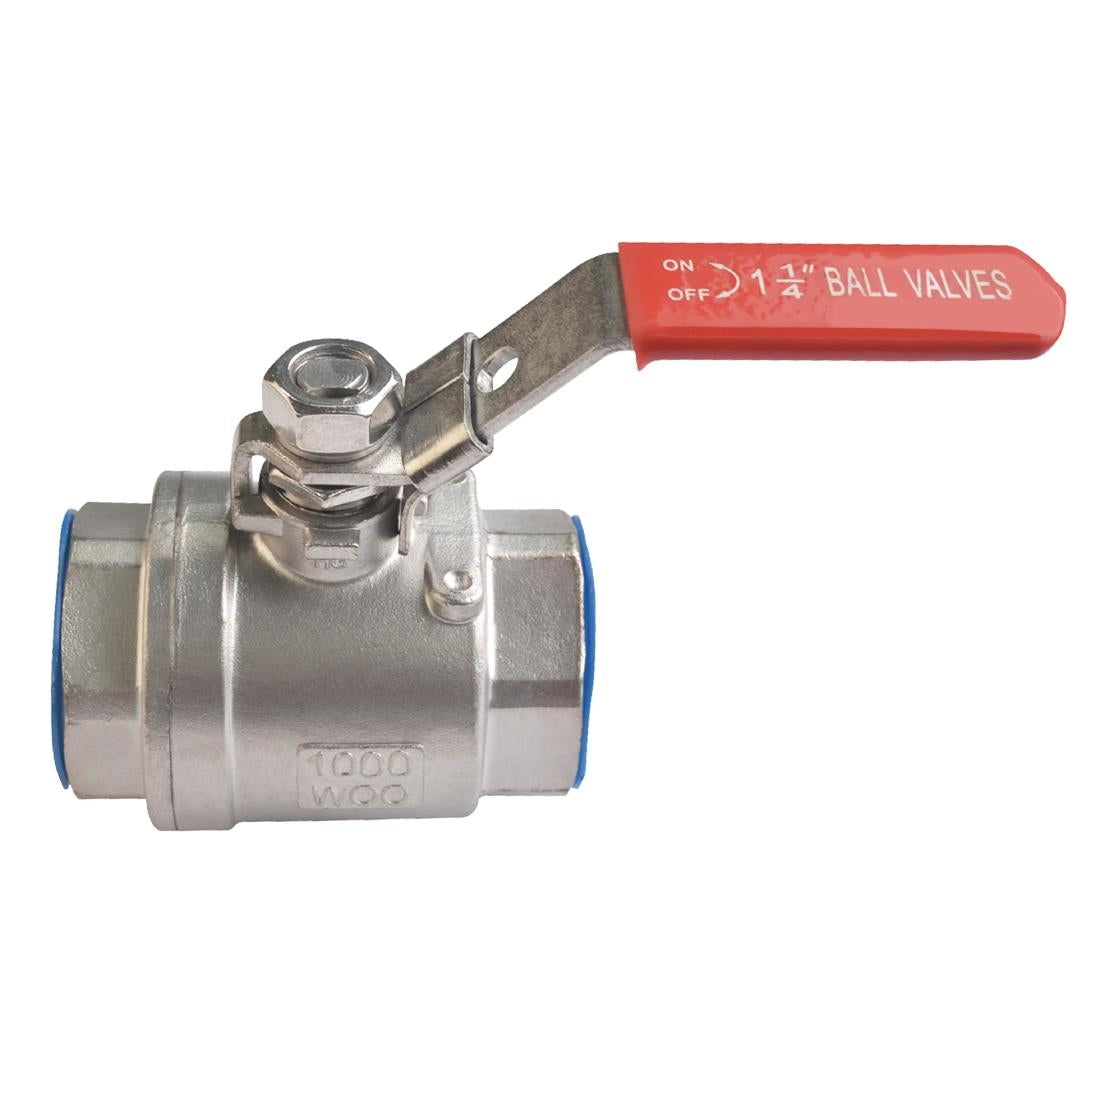 AH365 Thor handle with Lockball valve